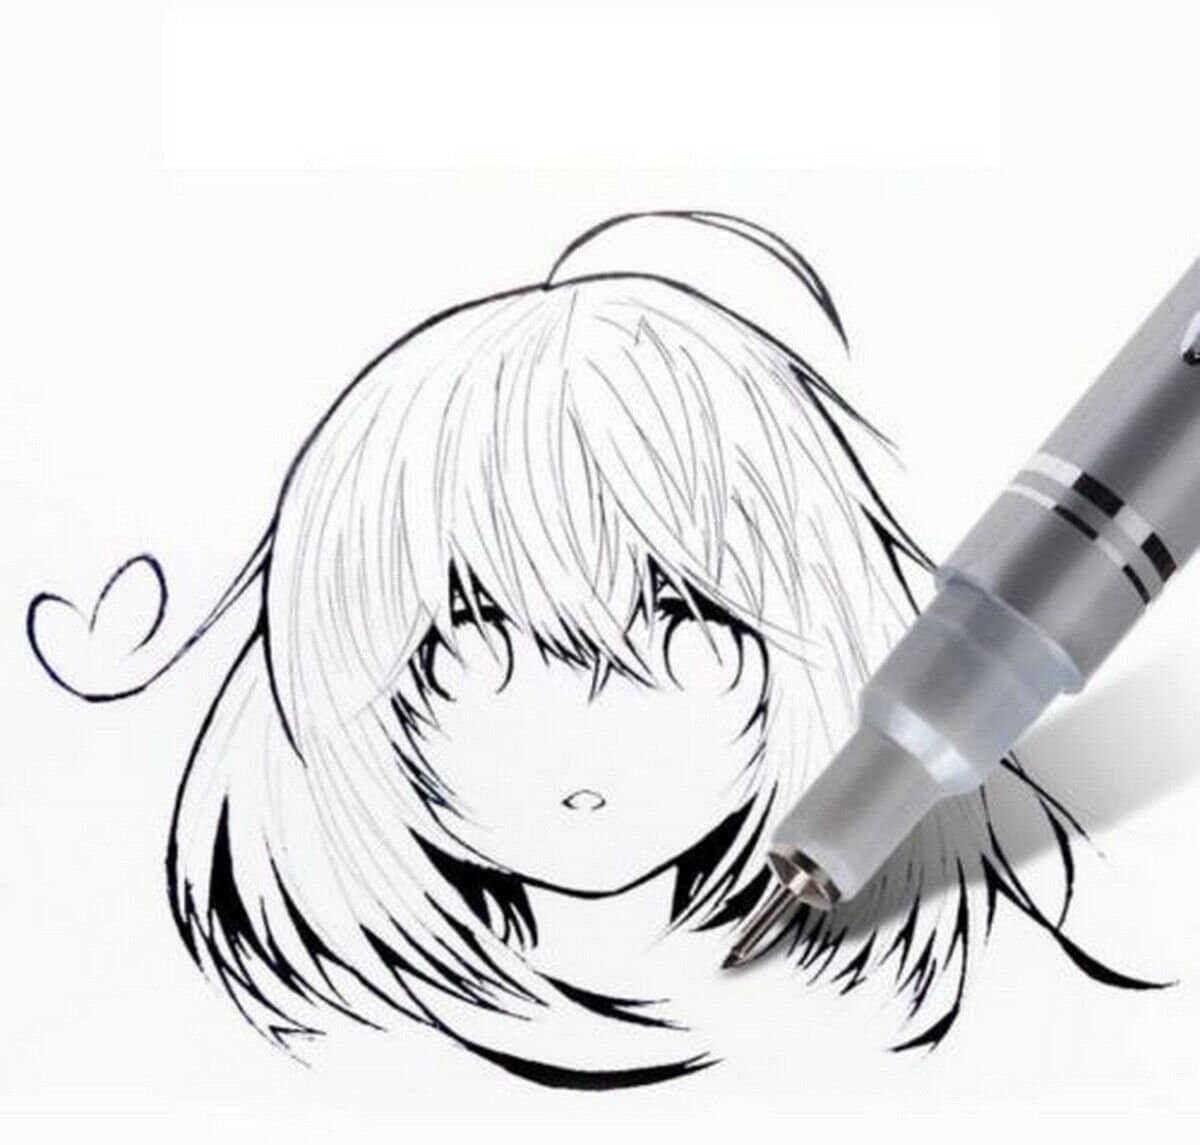 Needle Drawing Pen Art Drawing Fineliner Pens Brush Set Signature